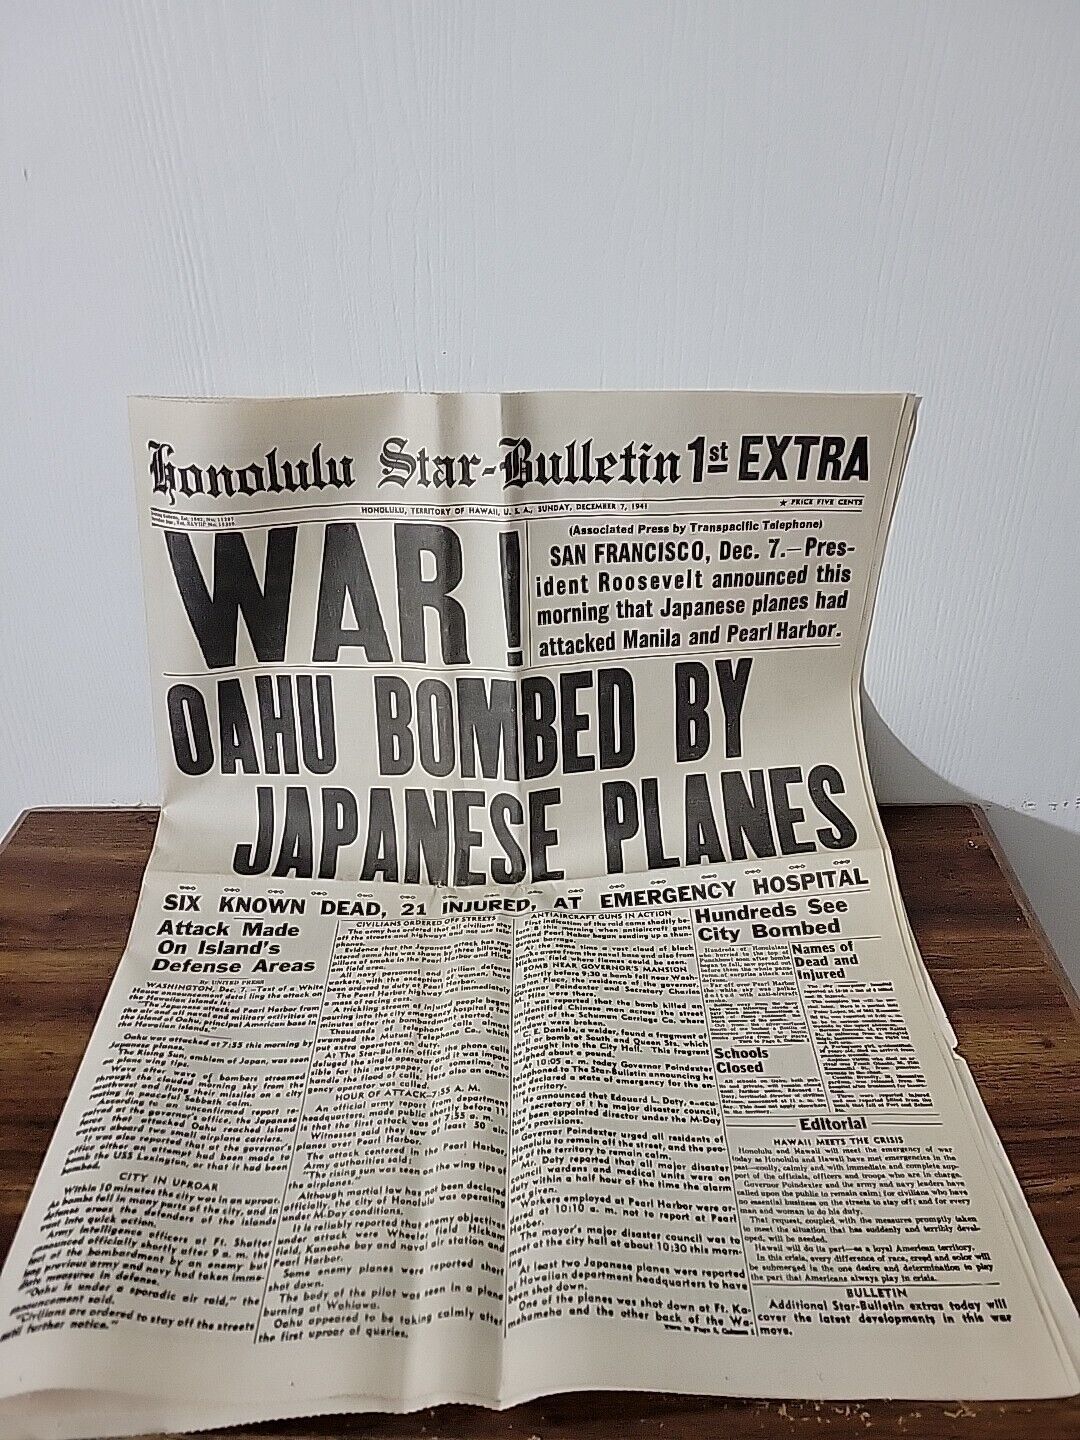 Honolulu Star-Bulletin Newspaper Dec 7 1941 1st Reprint Edition